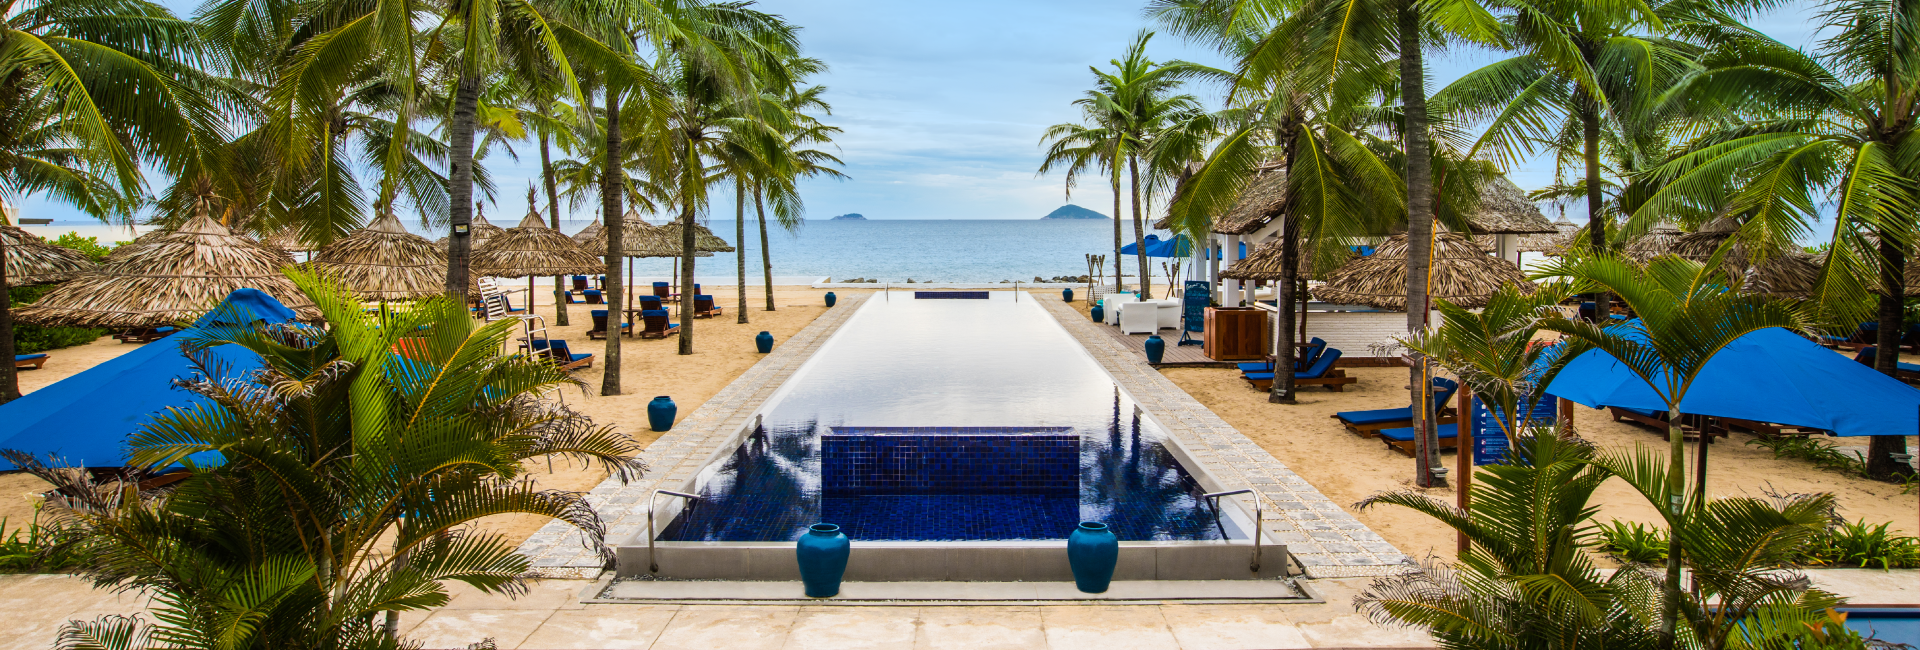 Sunrise Premium Resort and Spa Hoi An